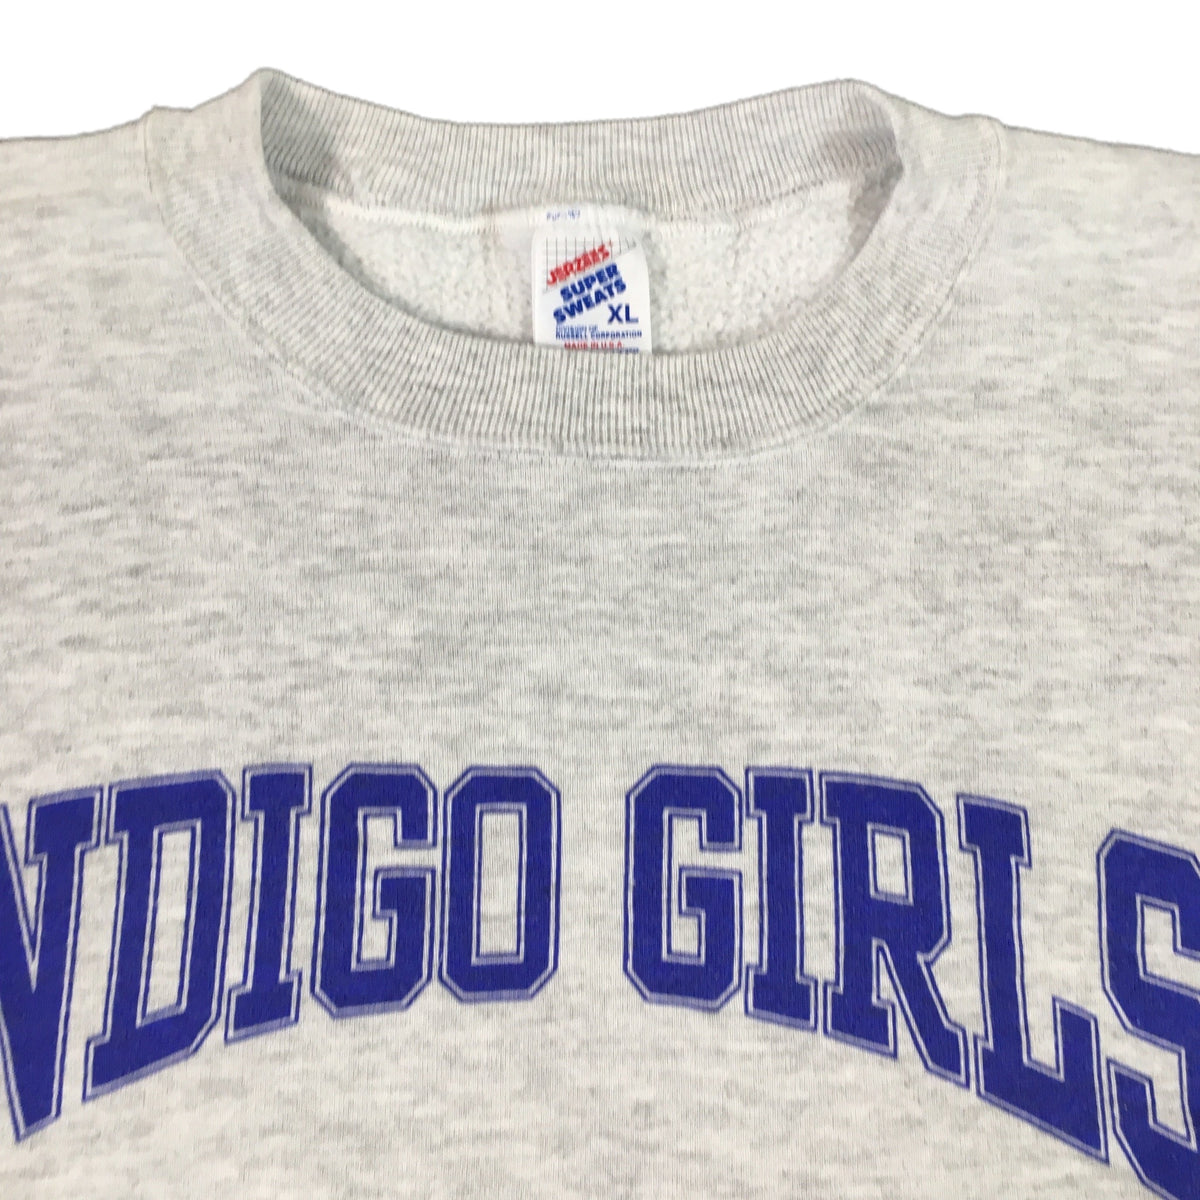 Vintage Indigo Girls &quot;Arch Logo&quot; Crewneck - jointcustodydc